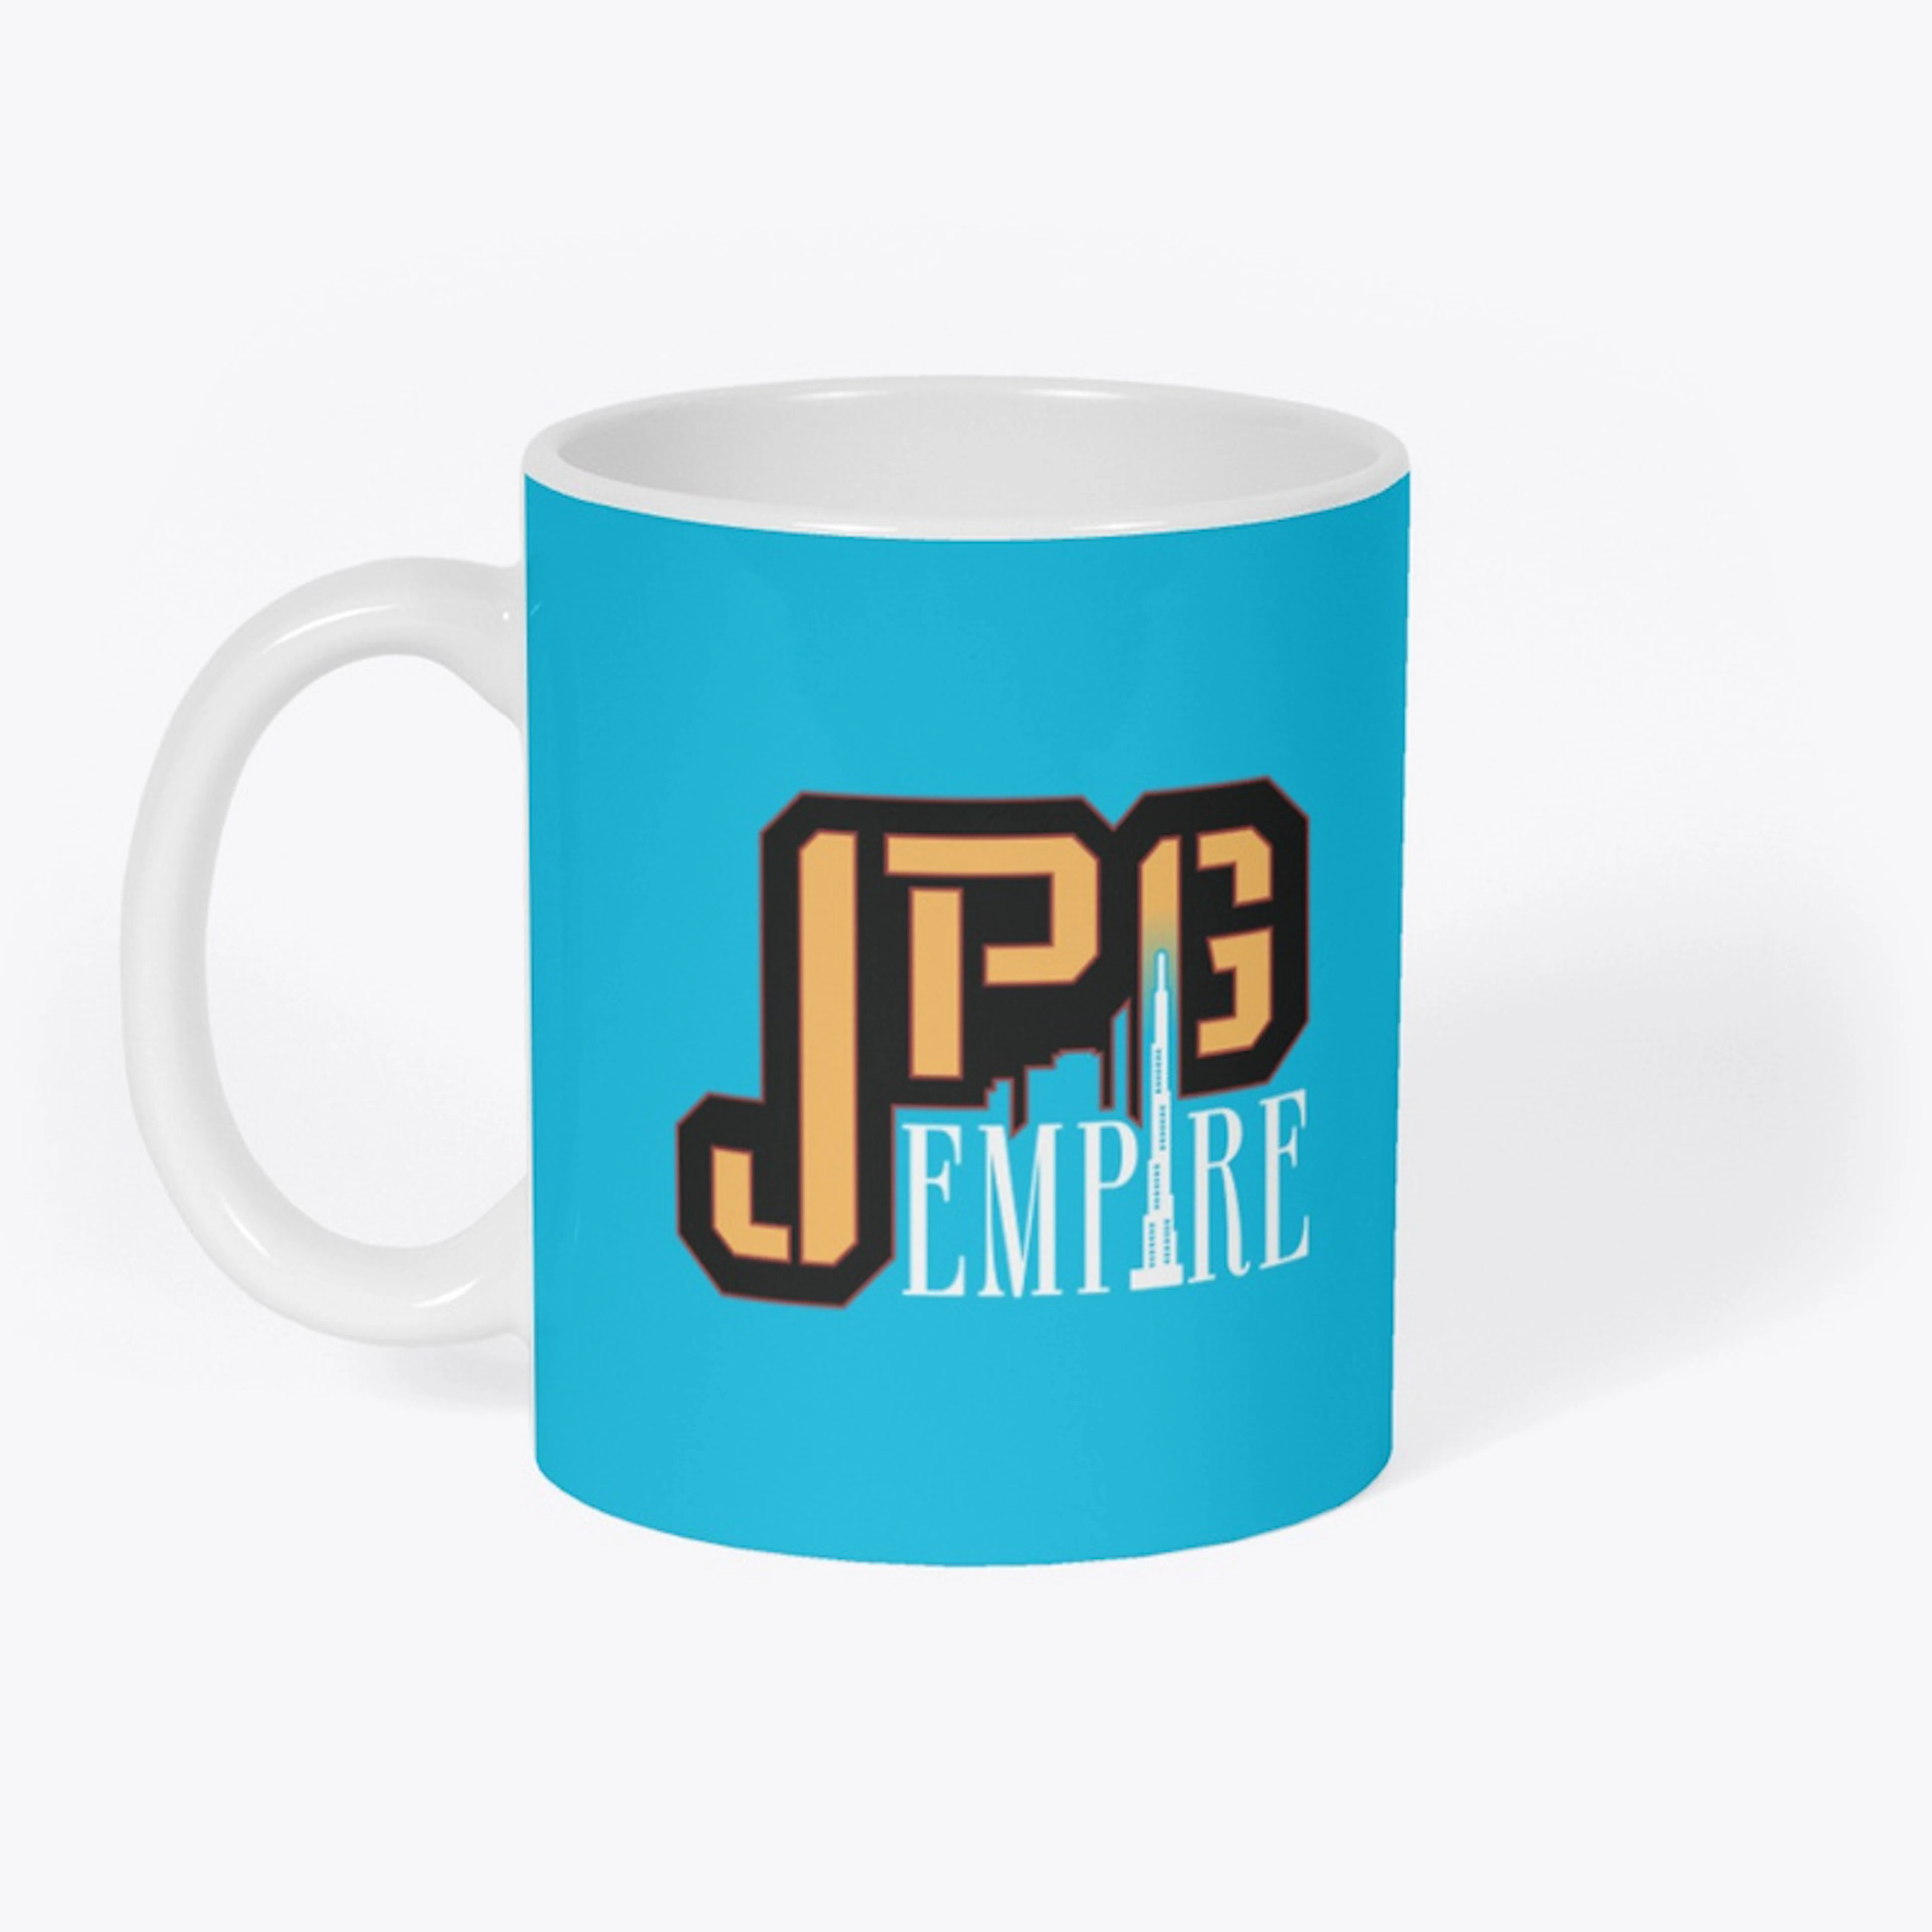 Jpg Empire Merch